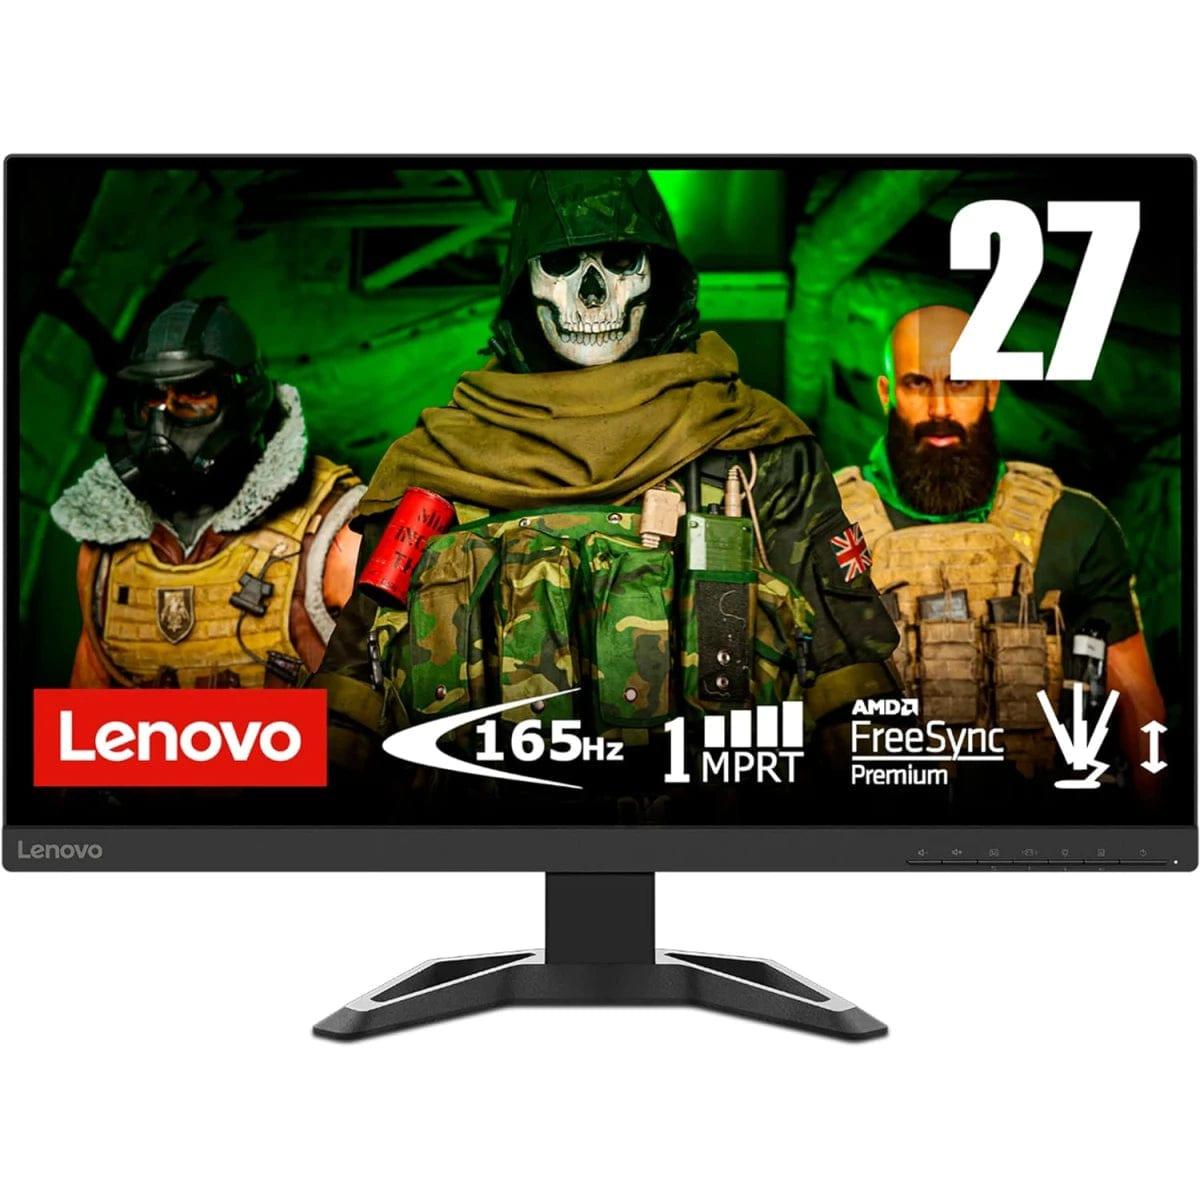 LENOVO Computer Monitors Lenovo G27-30 27" Gaming Monitor Full HD 1ms 165Hz 99% sRGB 90% DCI-P3 FreeSync™ Premium w/ Height Adjust Stand & Speaker 2xHMDI 1X DP